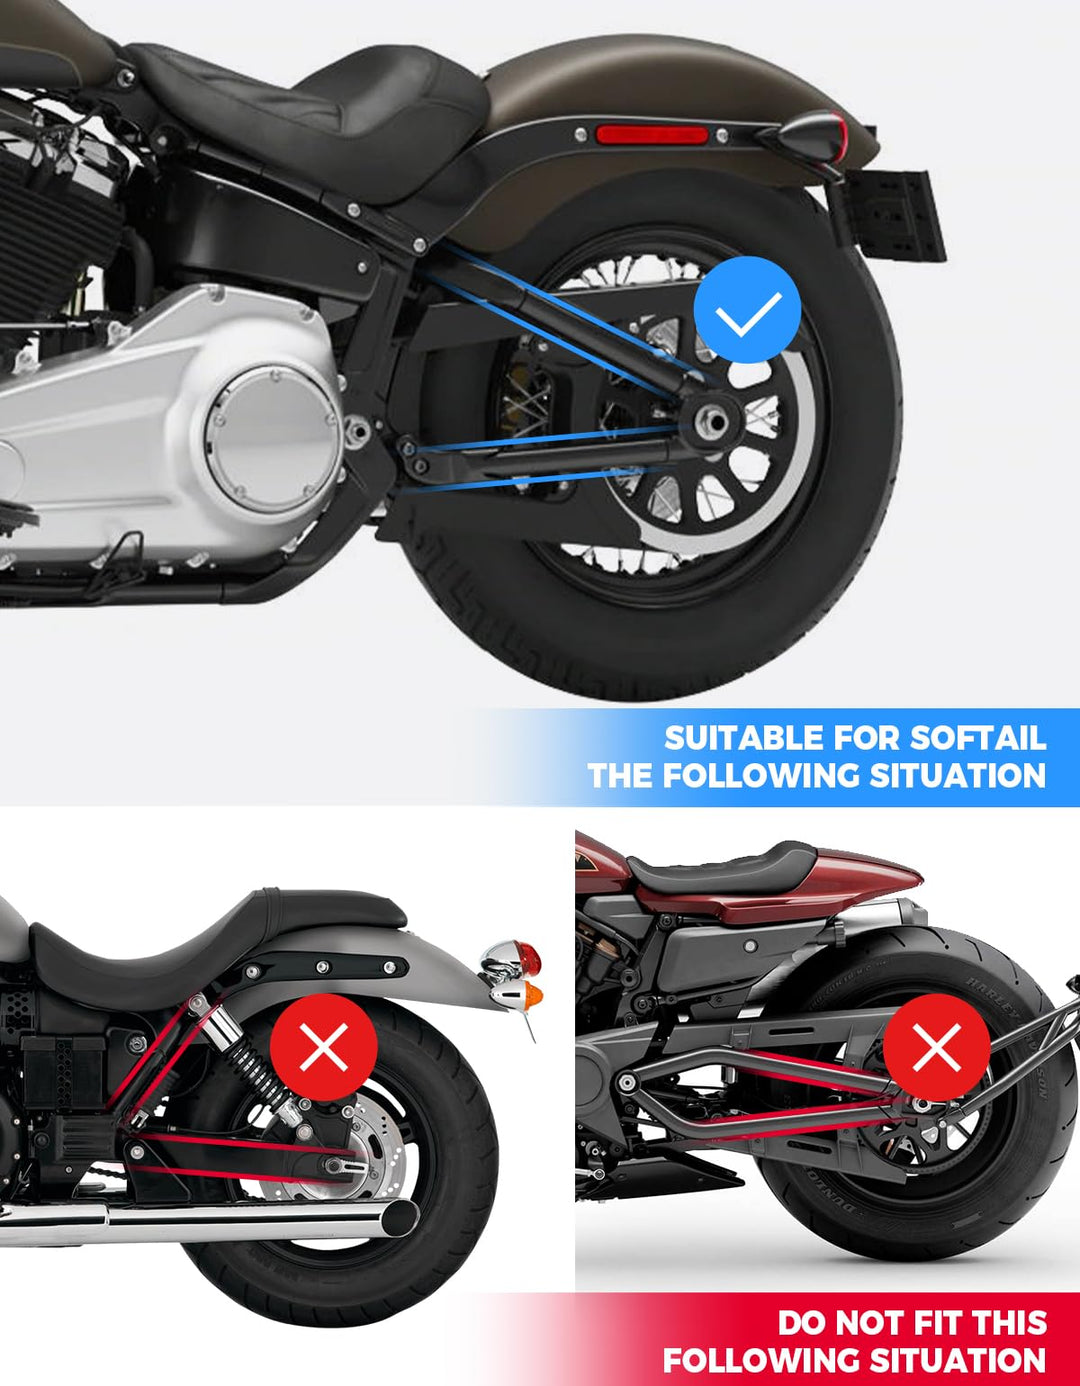 Motorcycle Left Side Swingarm Bag for Softail Sportster S Models